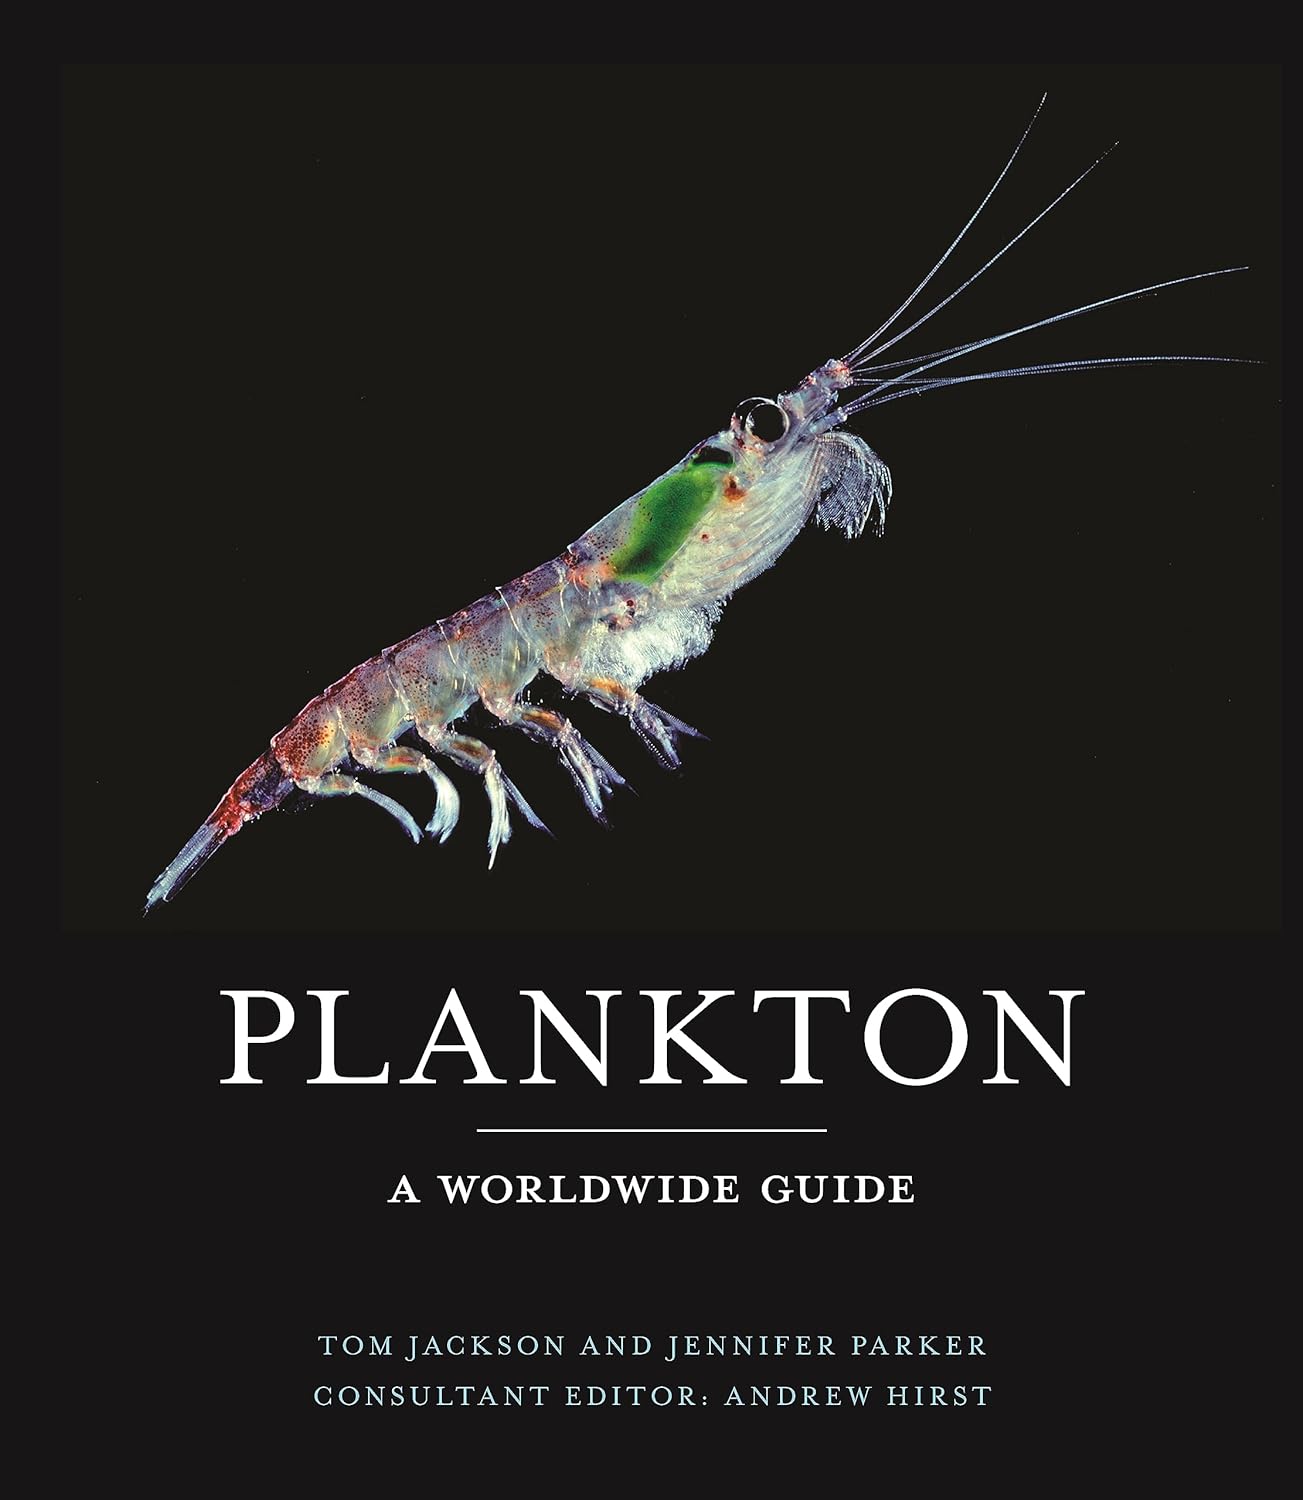 Plankton - a worldwide guide book cover